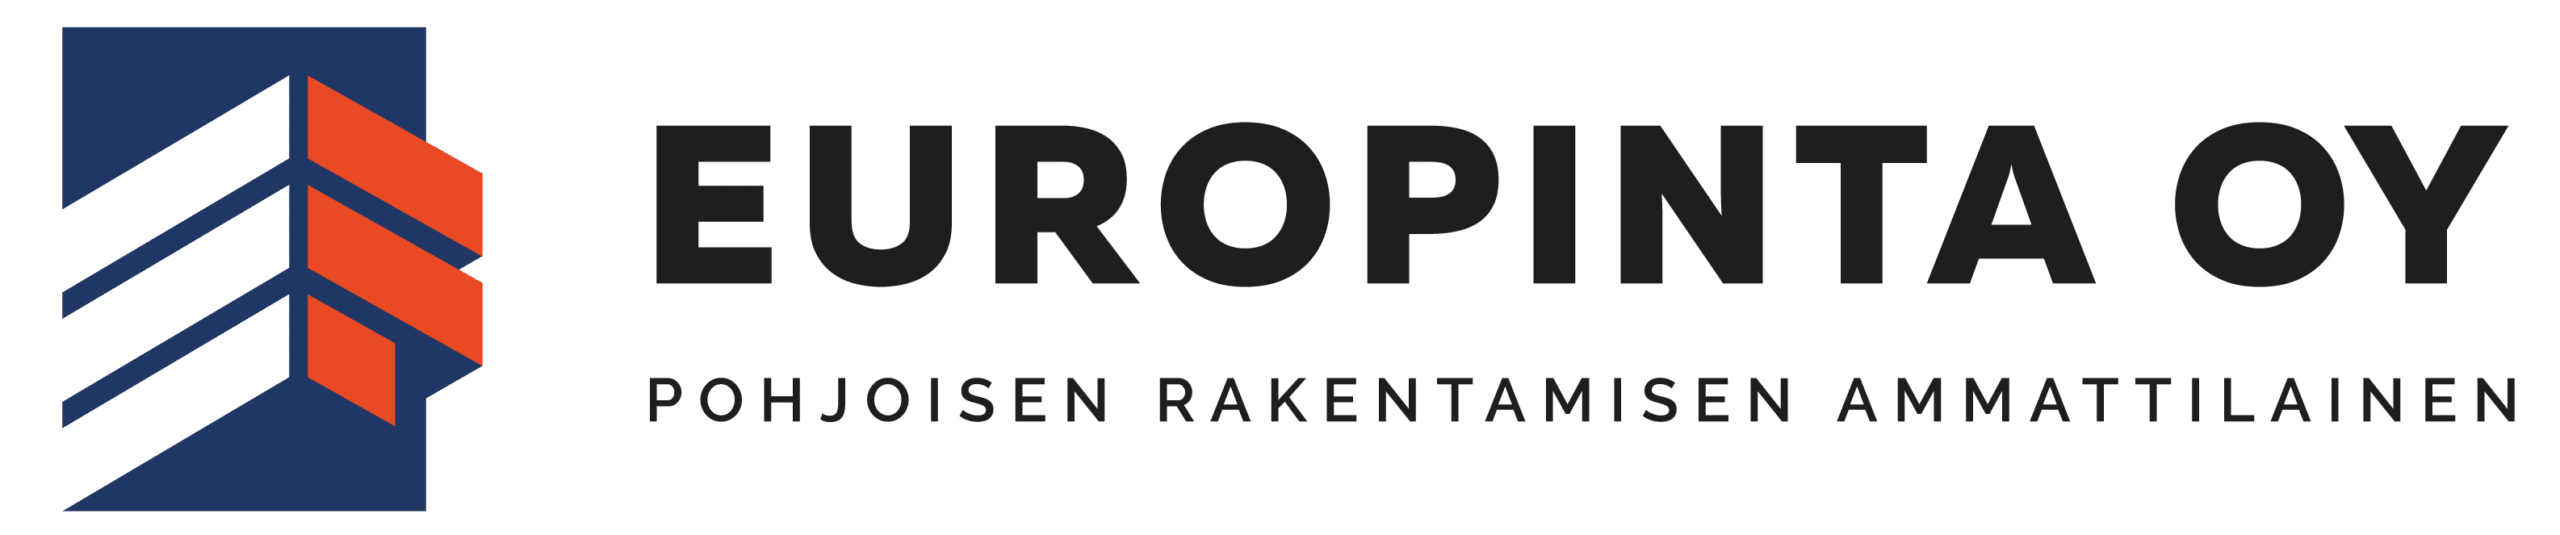 Europinta logo